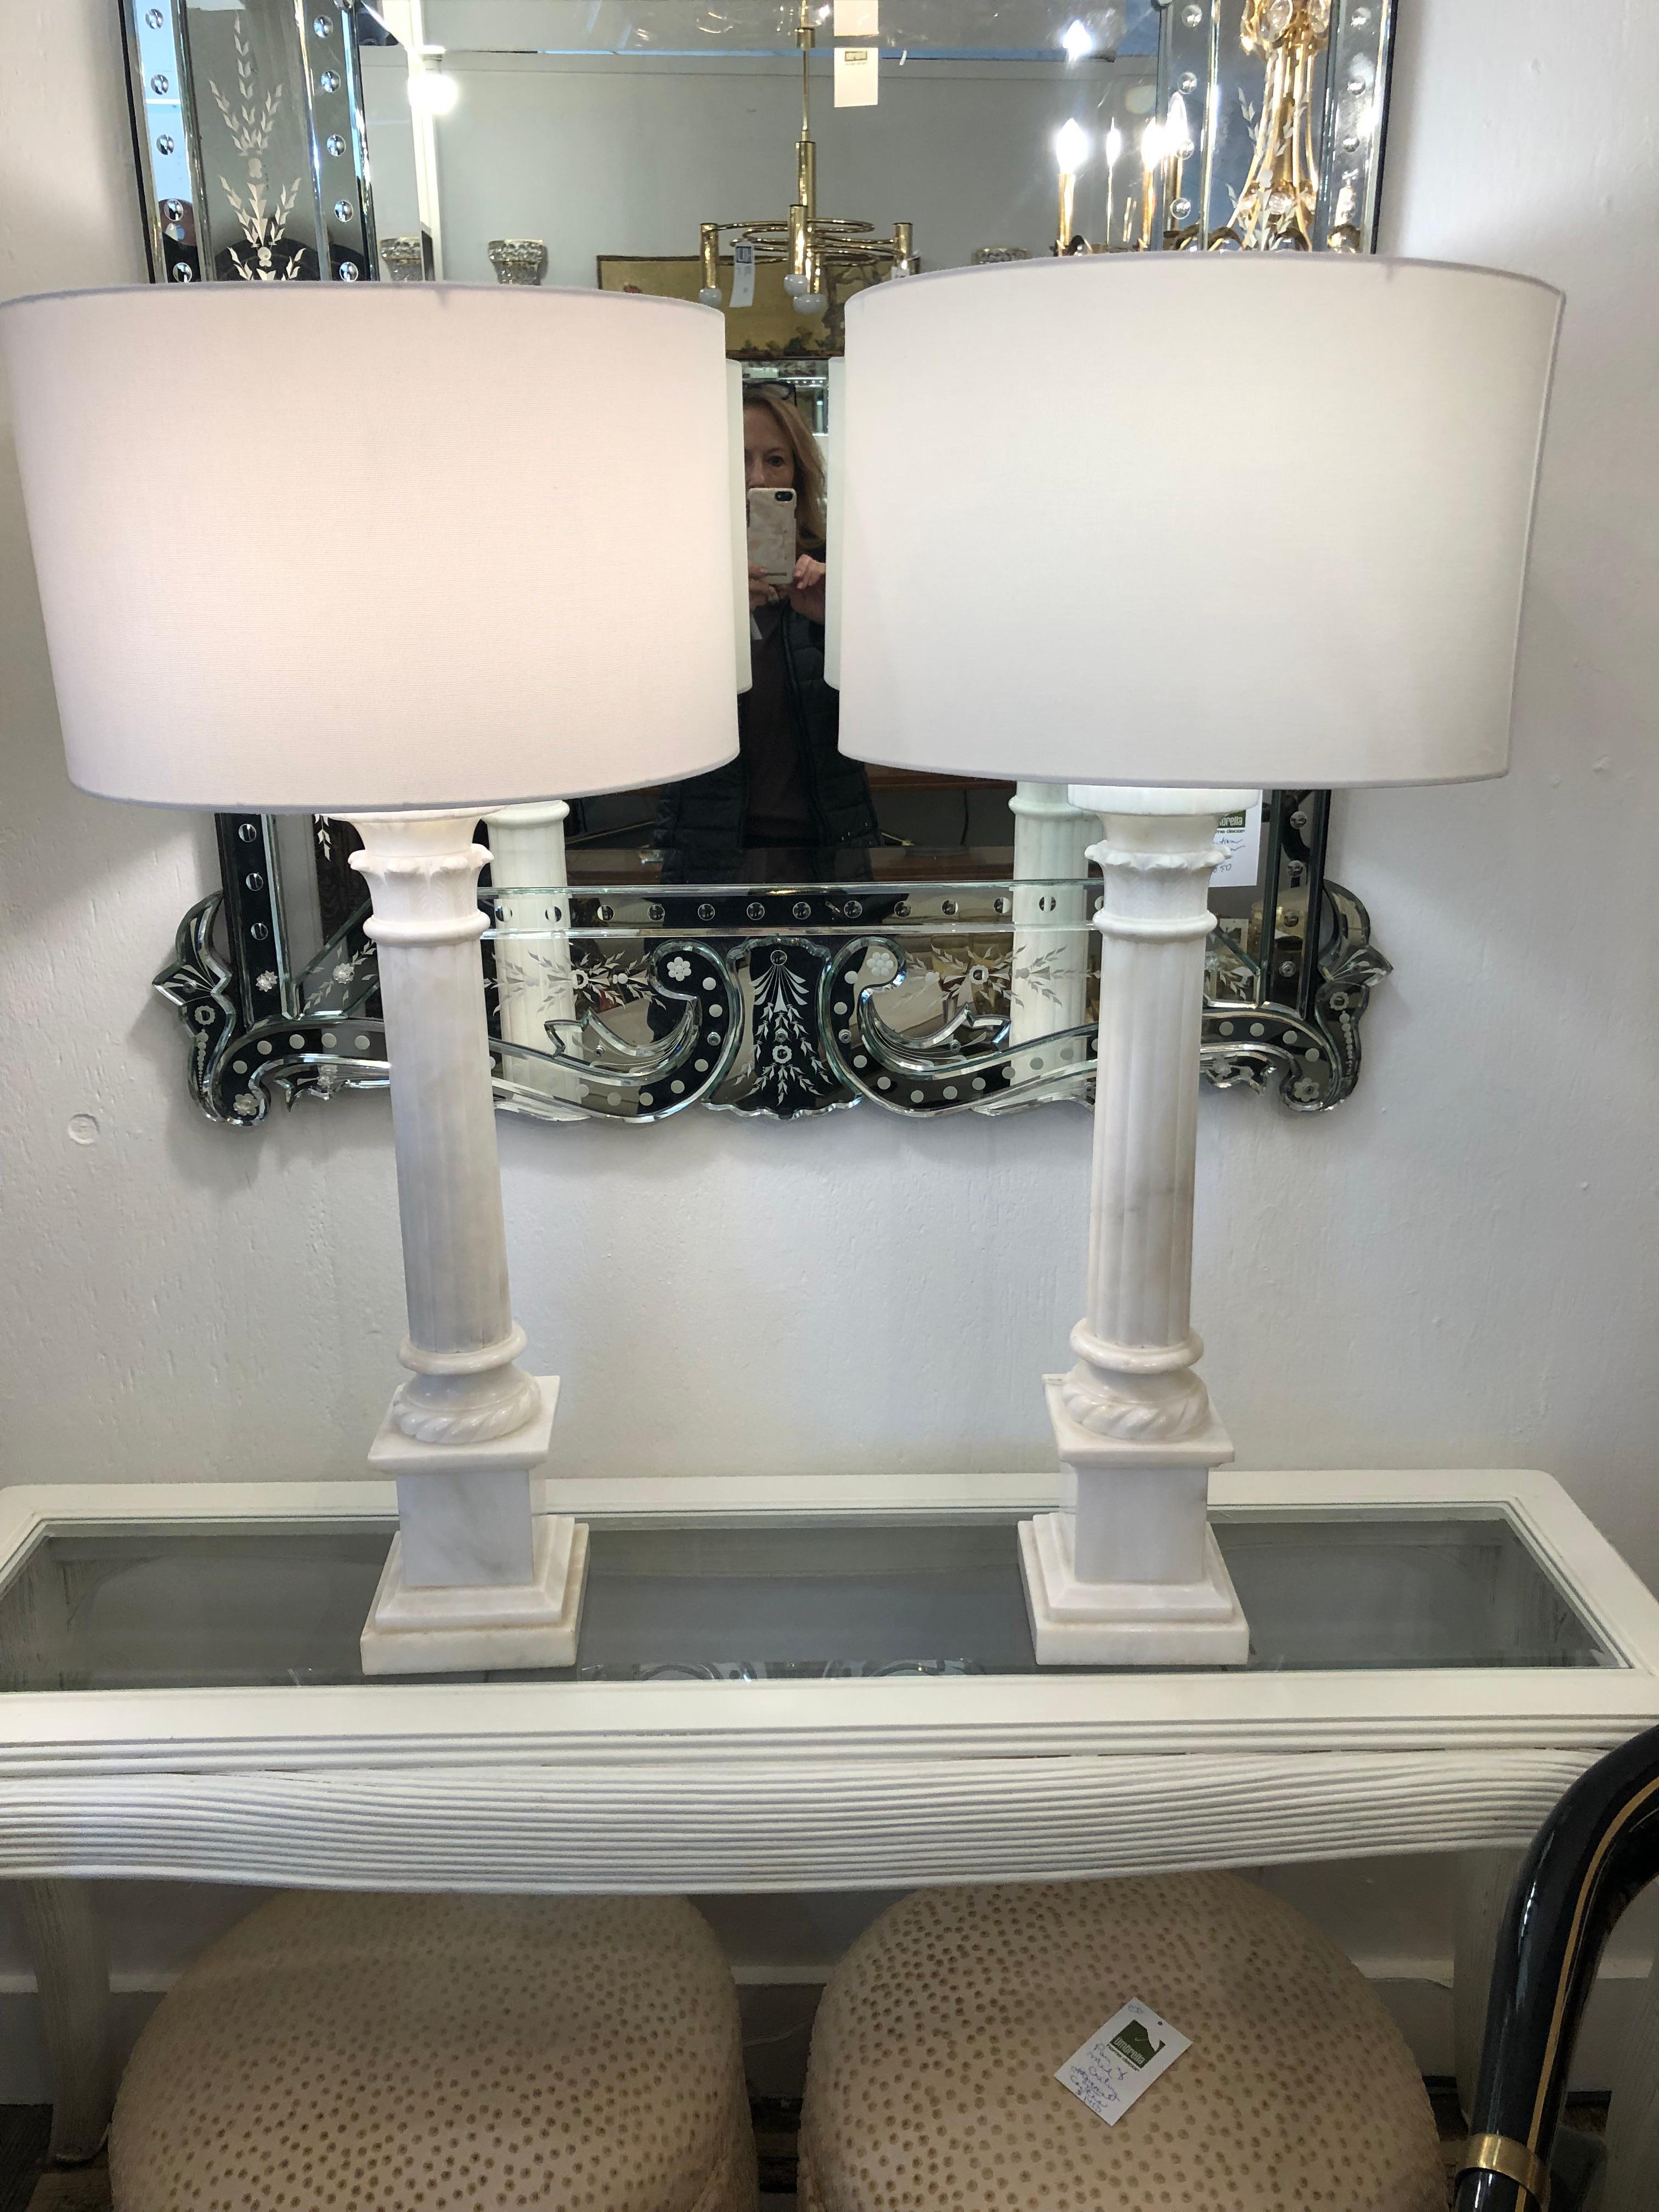 Pair of large elegant classic columnar alabaster table lamps.  